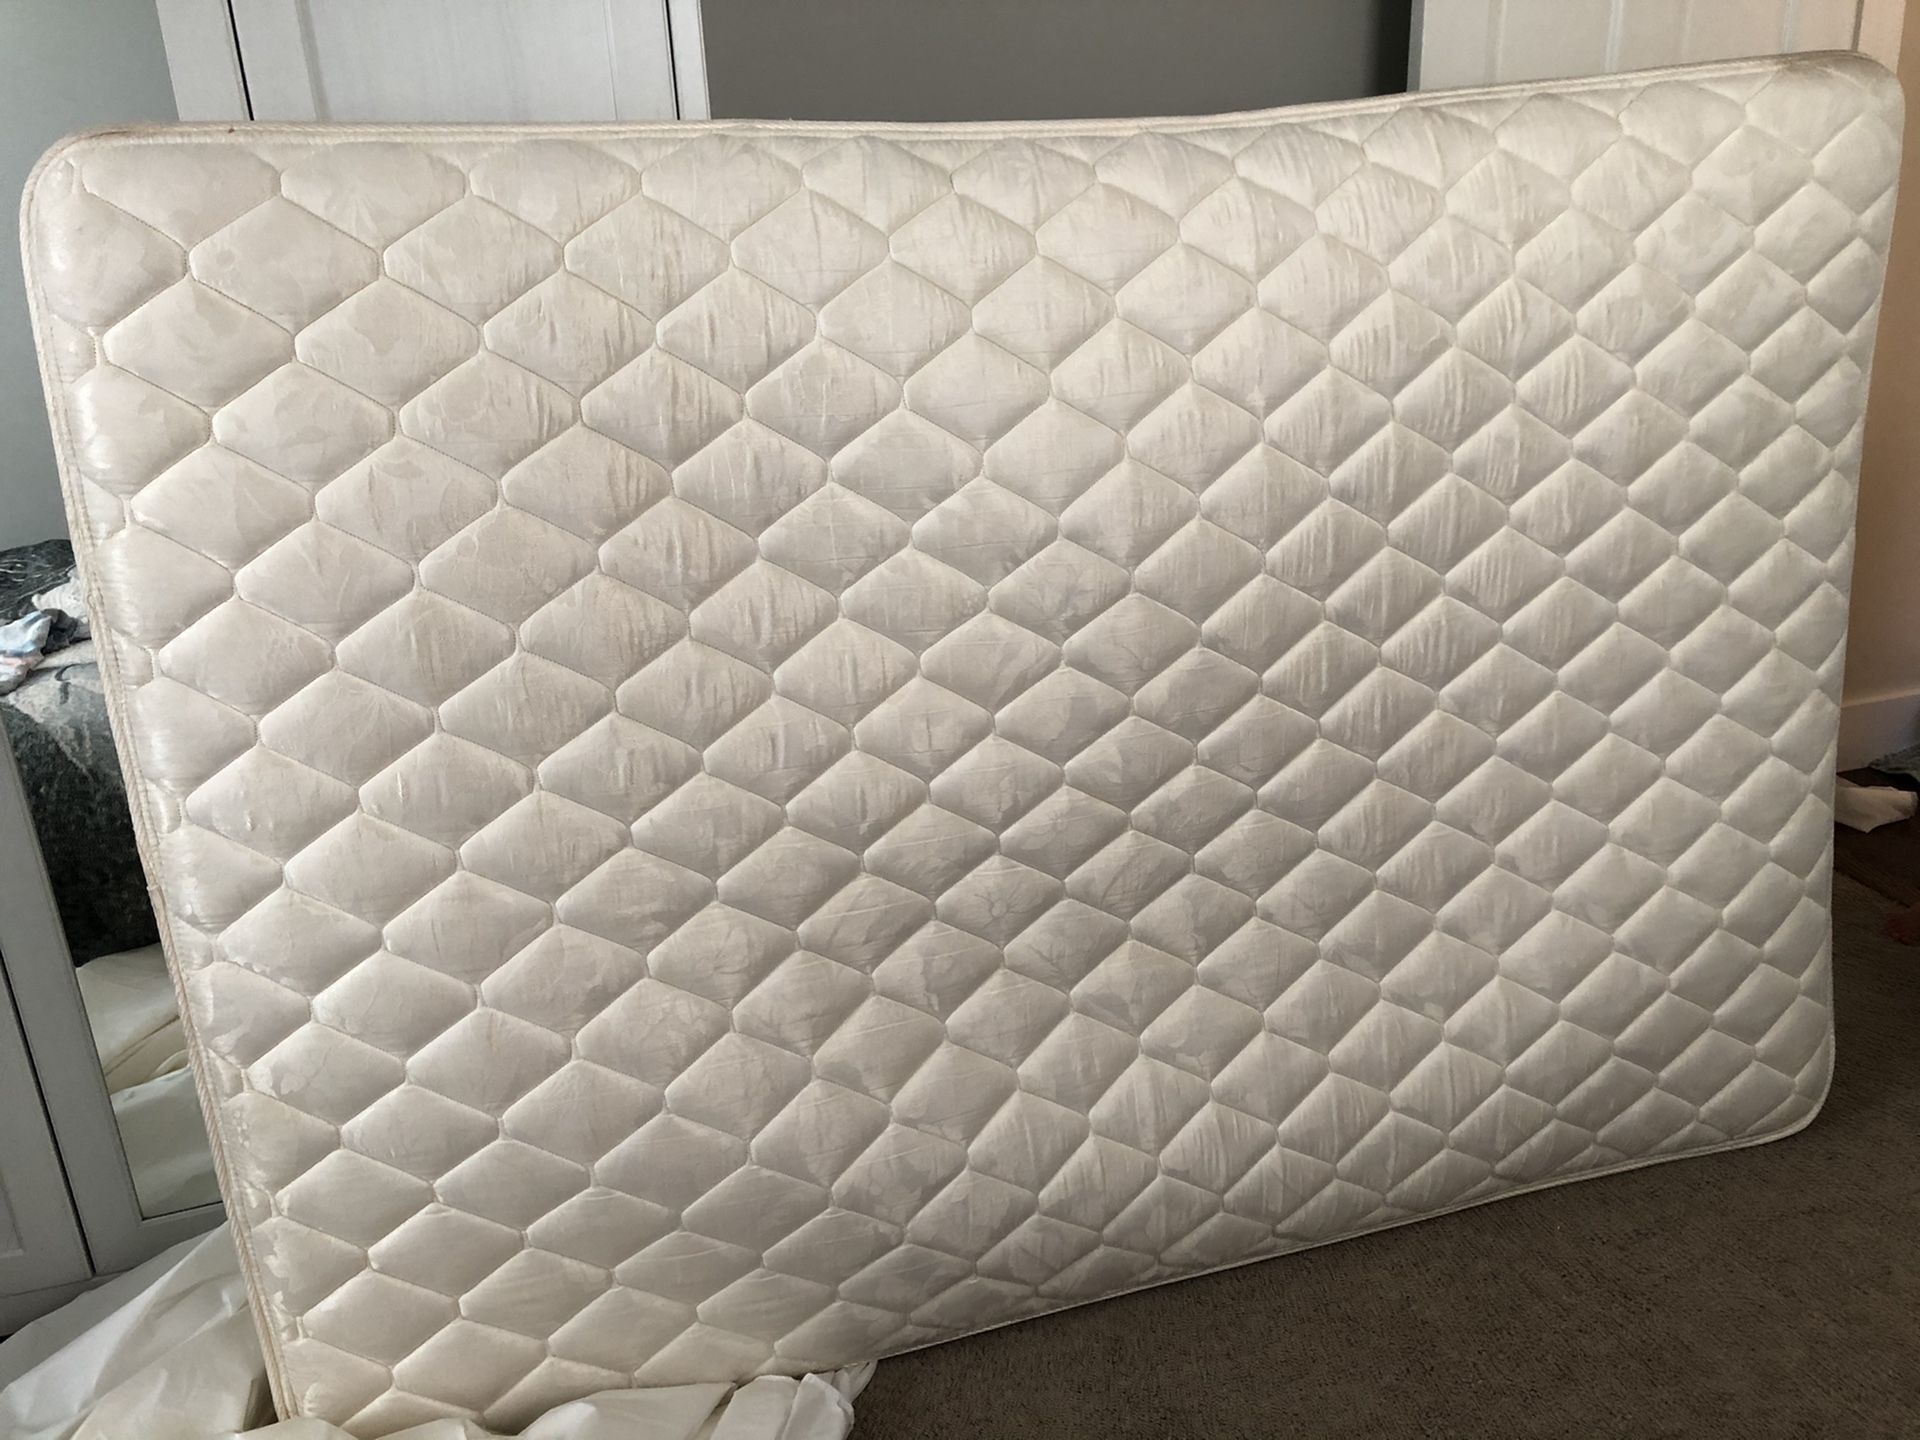 Full size spring mattress firm